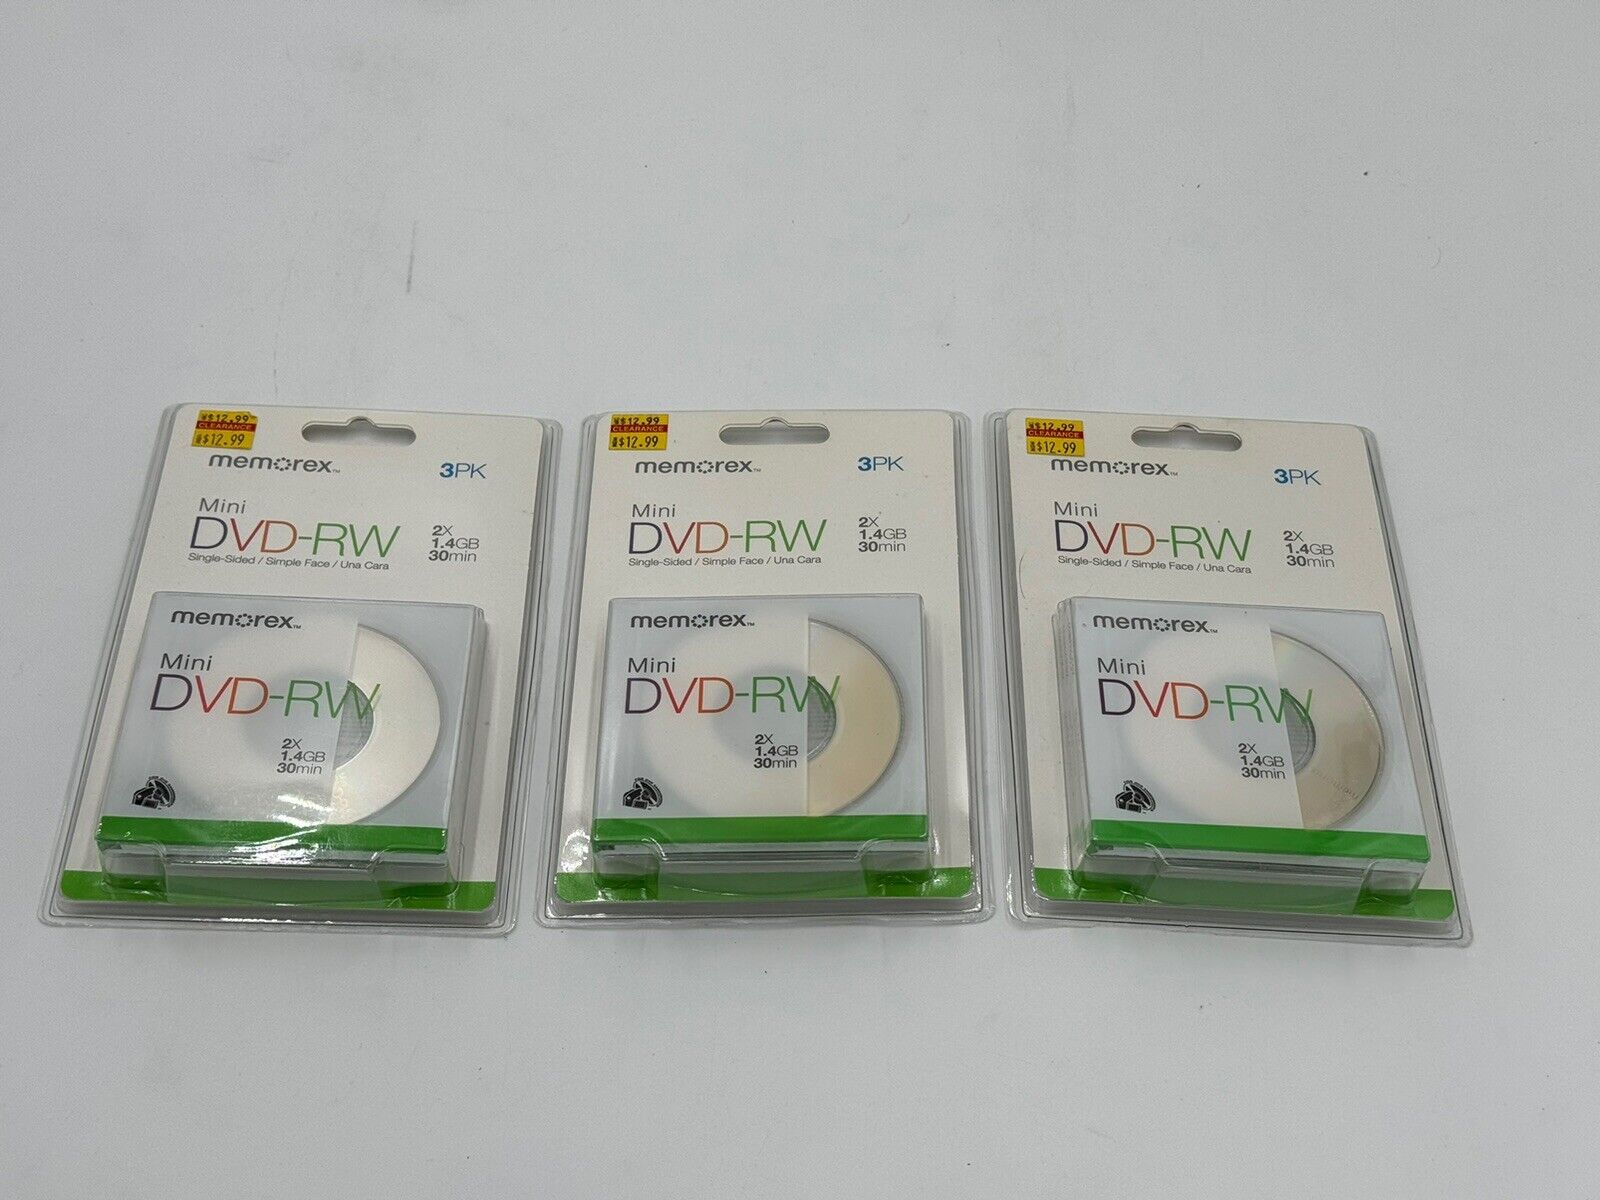 Lot of 3 Memorex Mini DVD-RW 3 Pack Discs Unopened Single Sided 1.4 GB 30 min